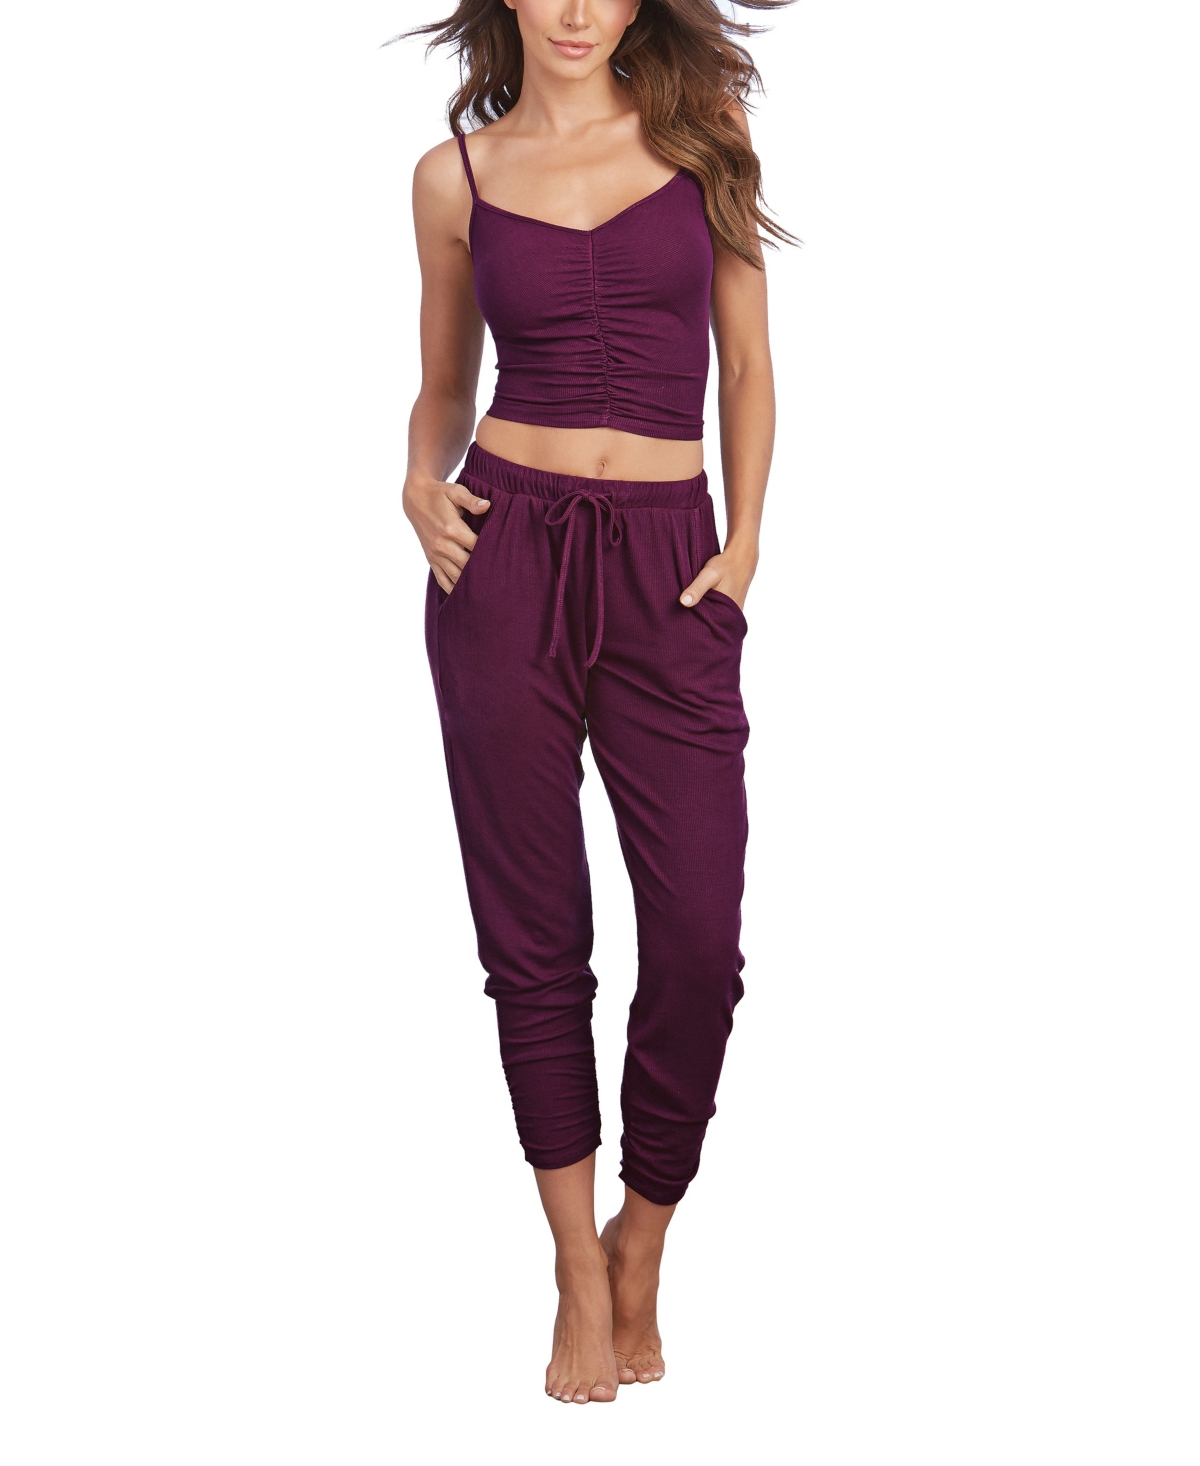 Dreamgirl Women's Soft Rib-Knit Jersey 2-Piece Camisole and Jogger Pants Pajama Set